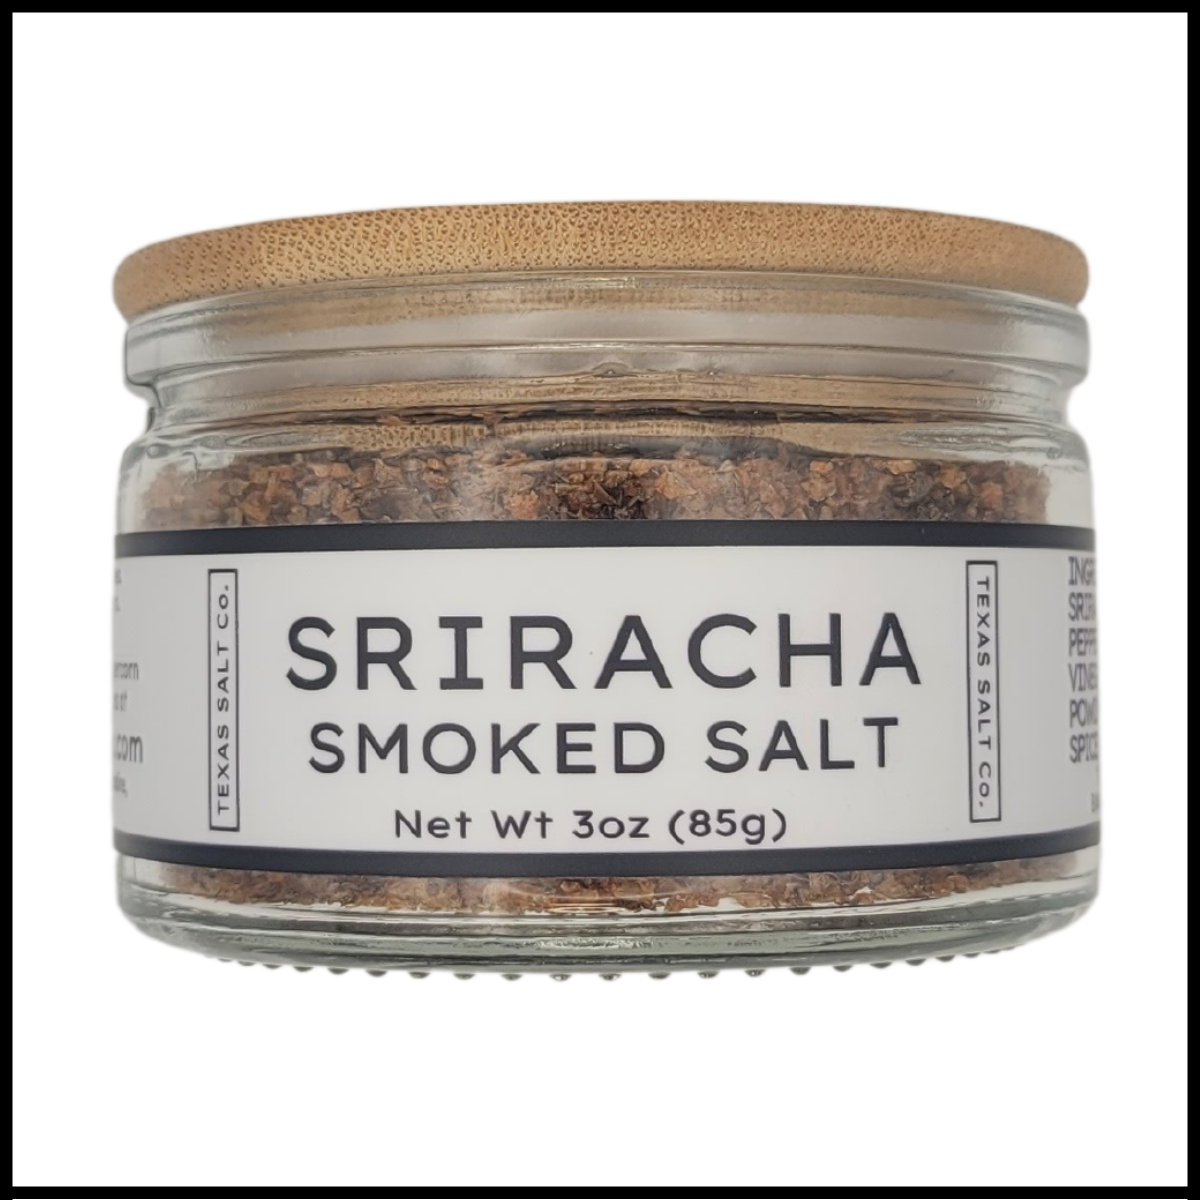 sriracha smoked salt easy pinch jar